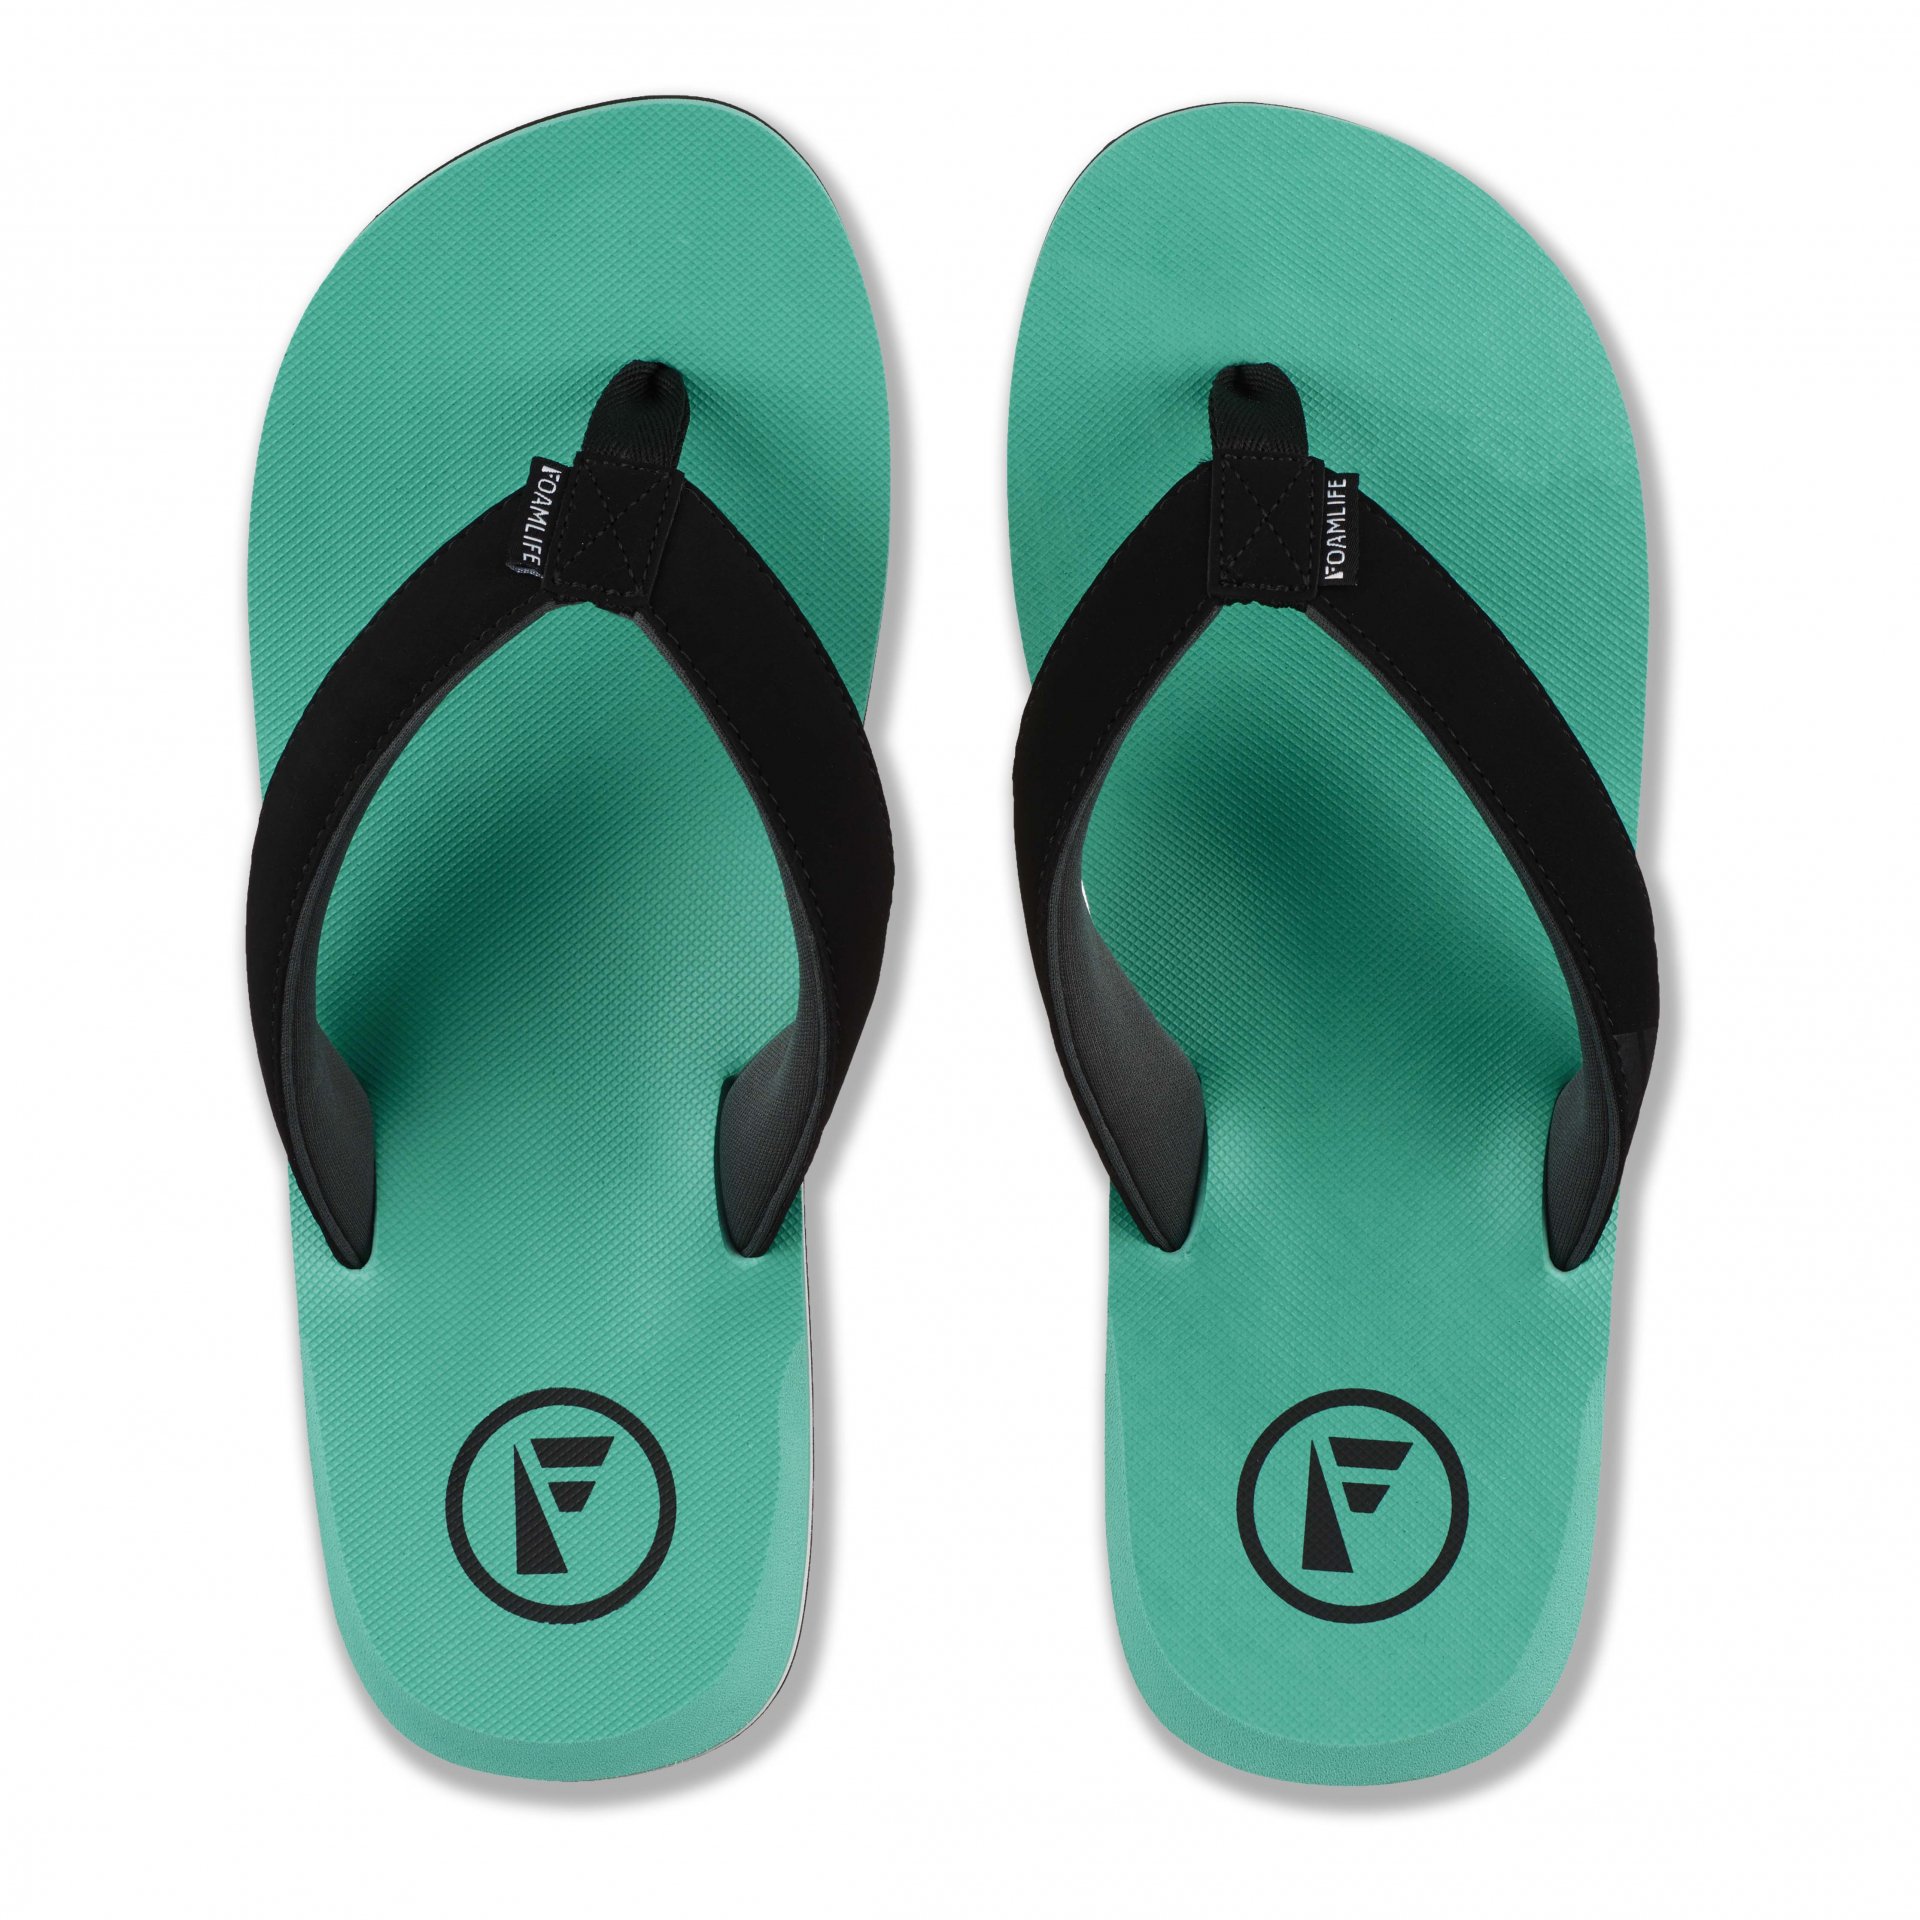 FoamLife Flip Flops Hit The Shelves In Time For Summer! | Features ...